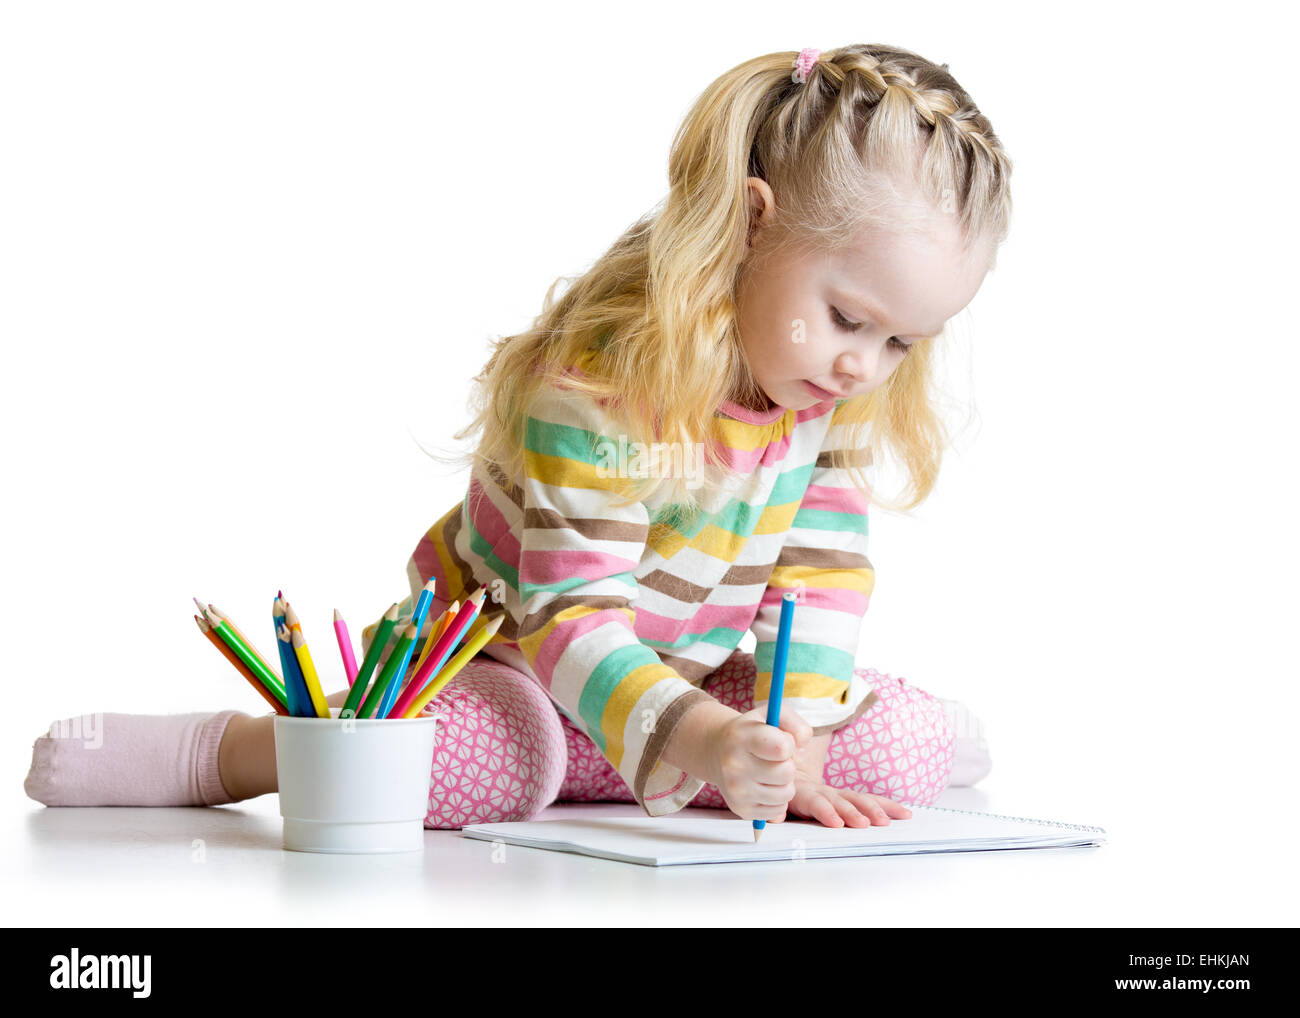 Alegre niña niño en edad preescolar con lápices de dibujo Foto de stock